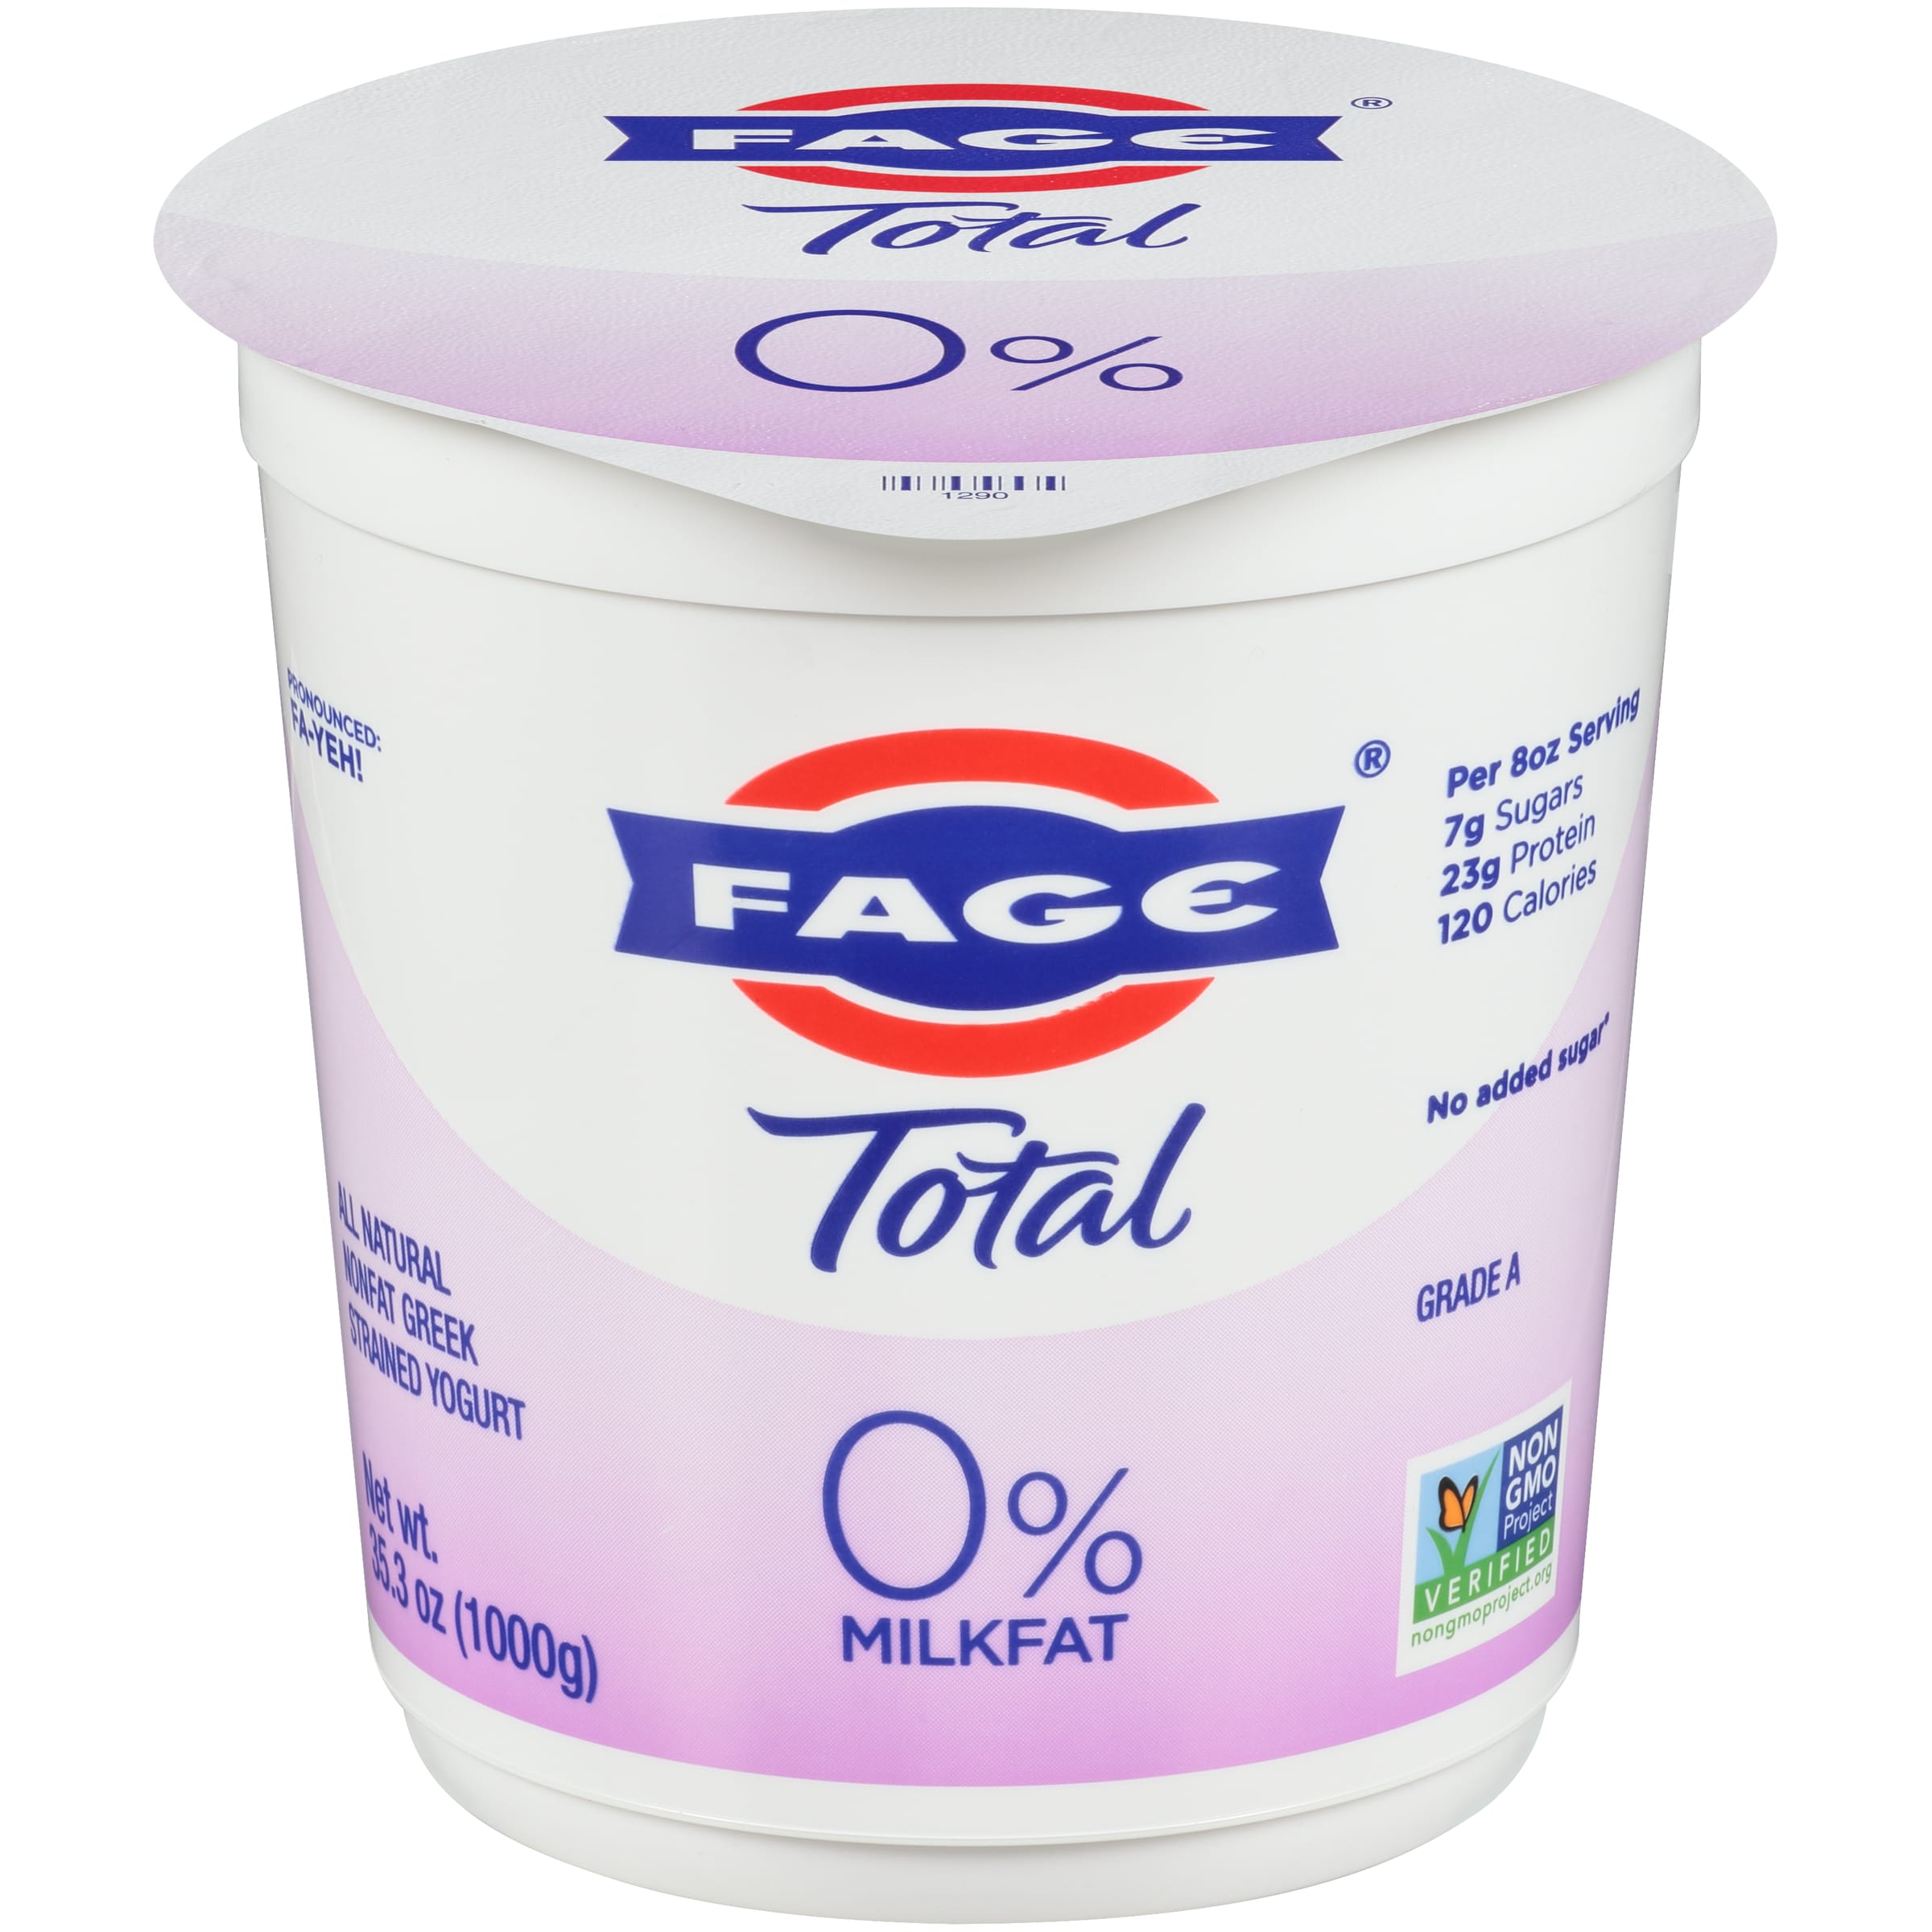 Fage Total 0% All Natural Nonfat Greek Strained Yogurt, 35.3 oz ...